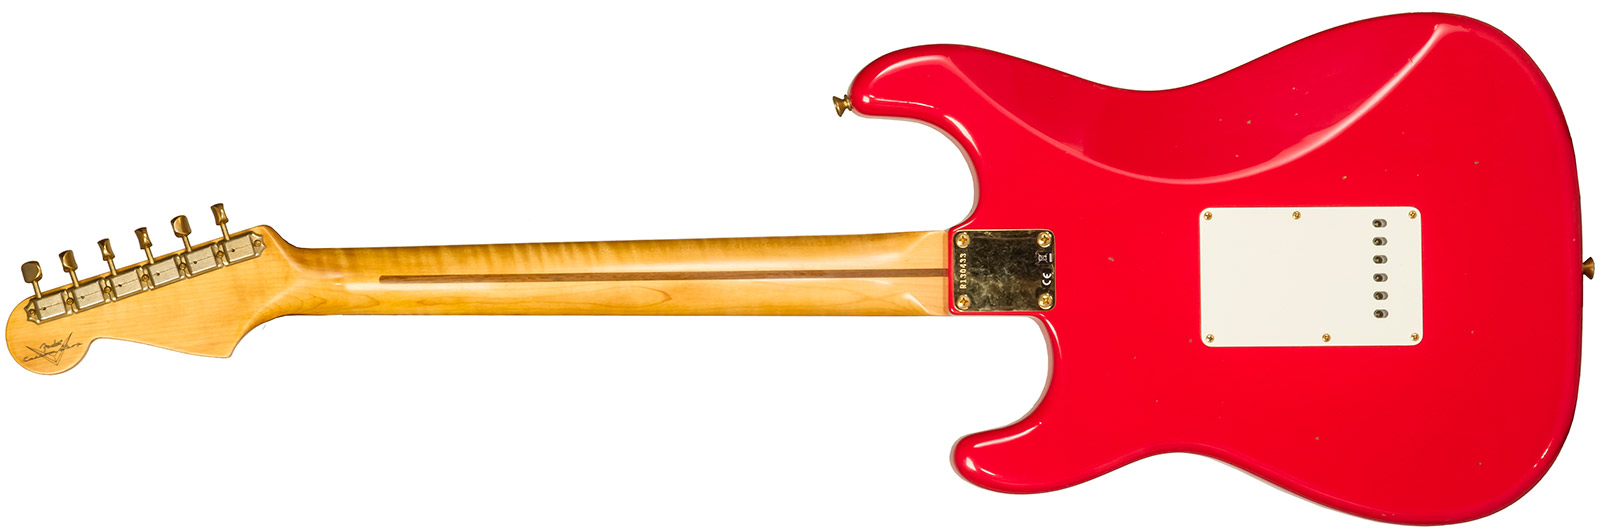 Fender Custom Shop Strat 1956 3s Trem Mn #r130433 - Journeyman Relic Fiesta Red - E-Gitarre in Str-Form - Variation 1